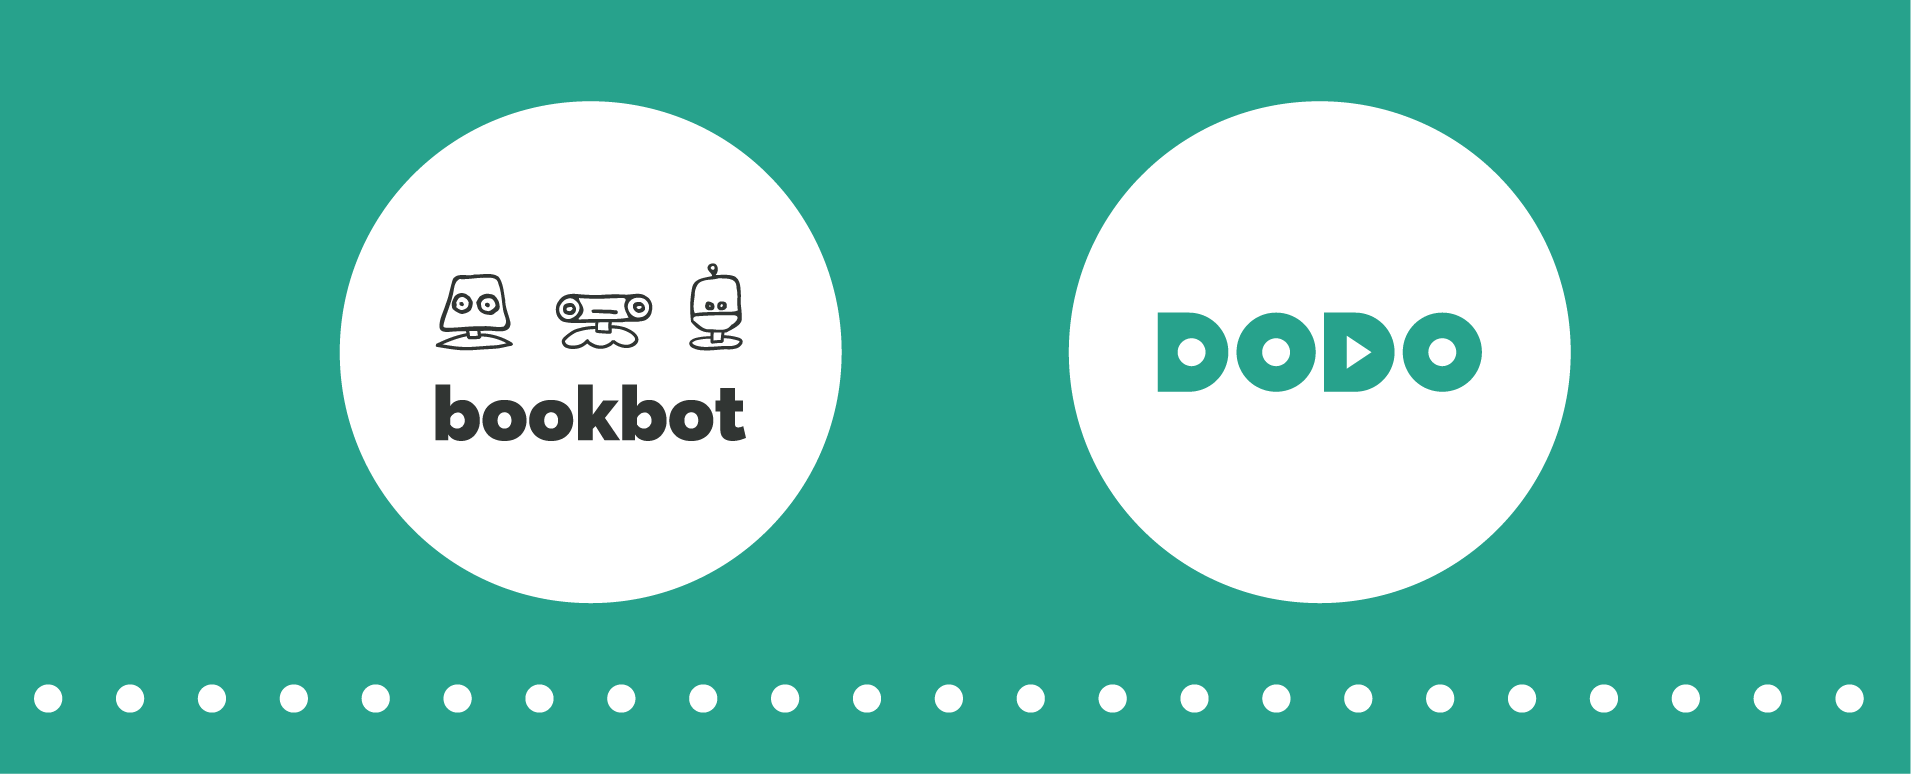 DODO & Bookbot